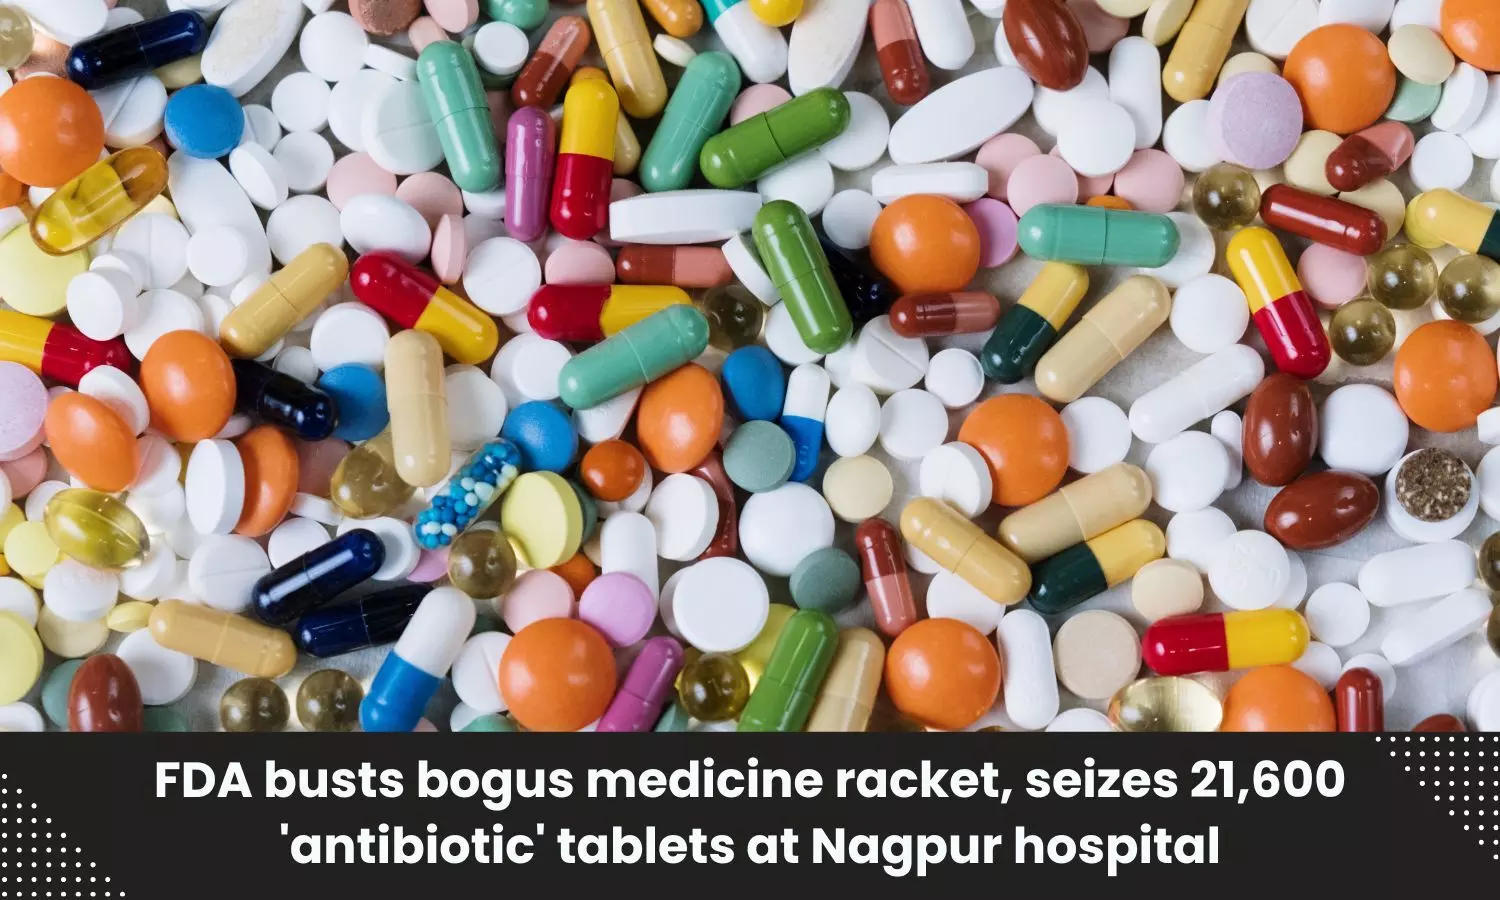 Bogus medicine racket busted by Maha FDA